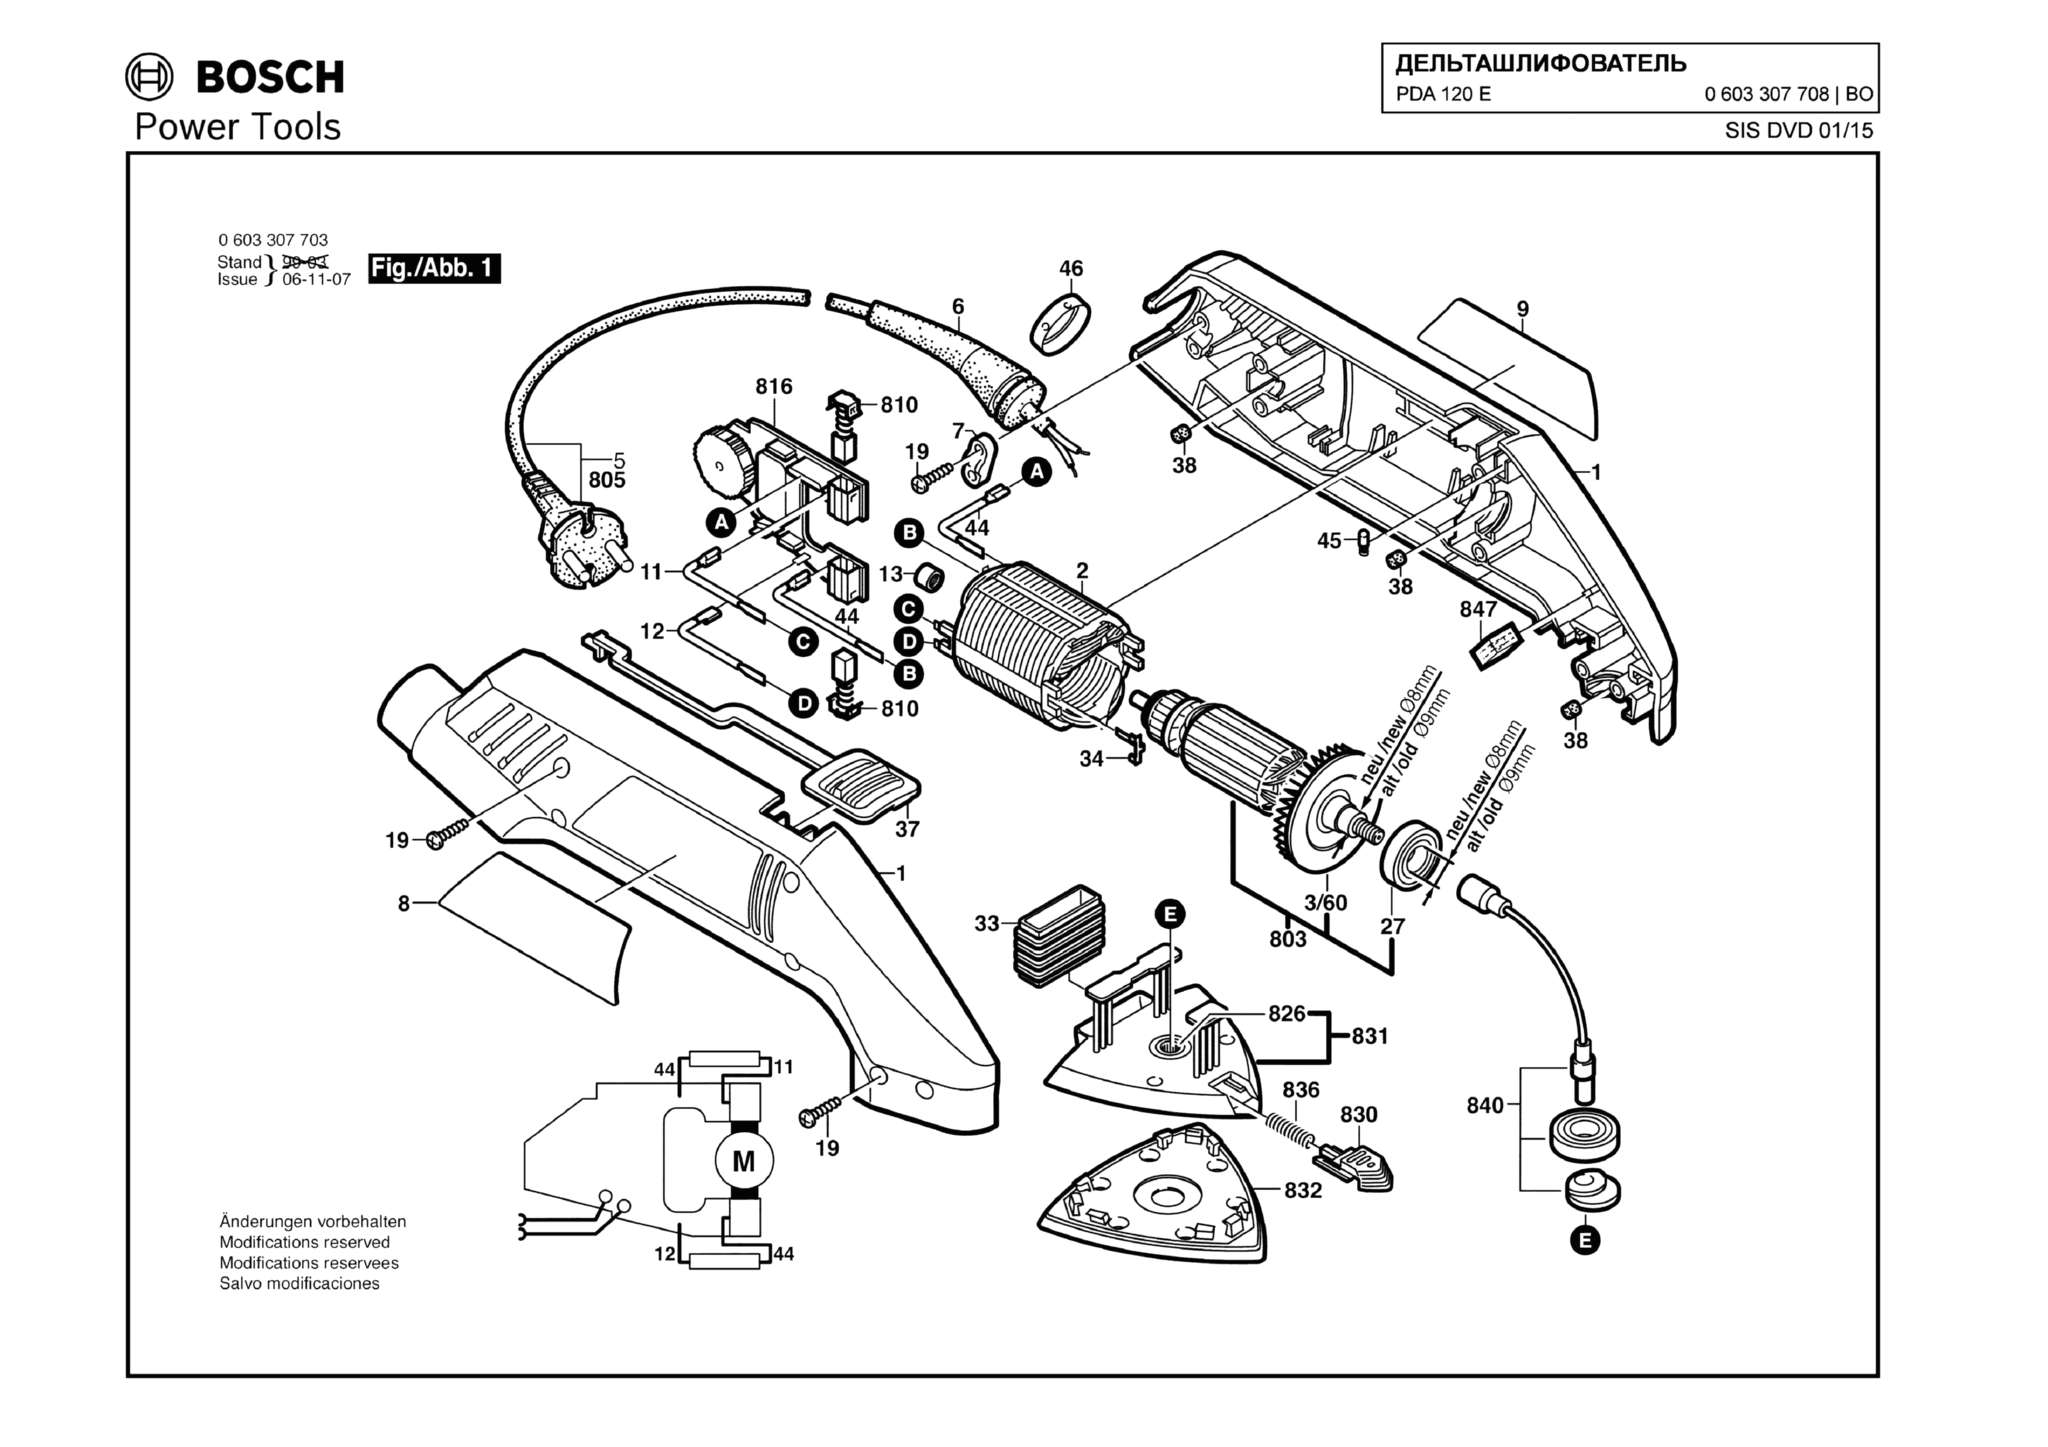 Запчасти, схема и деталировка Bosch PDA 120 E (ТИП 0603307708)